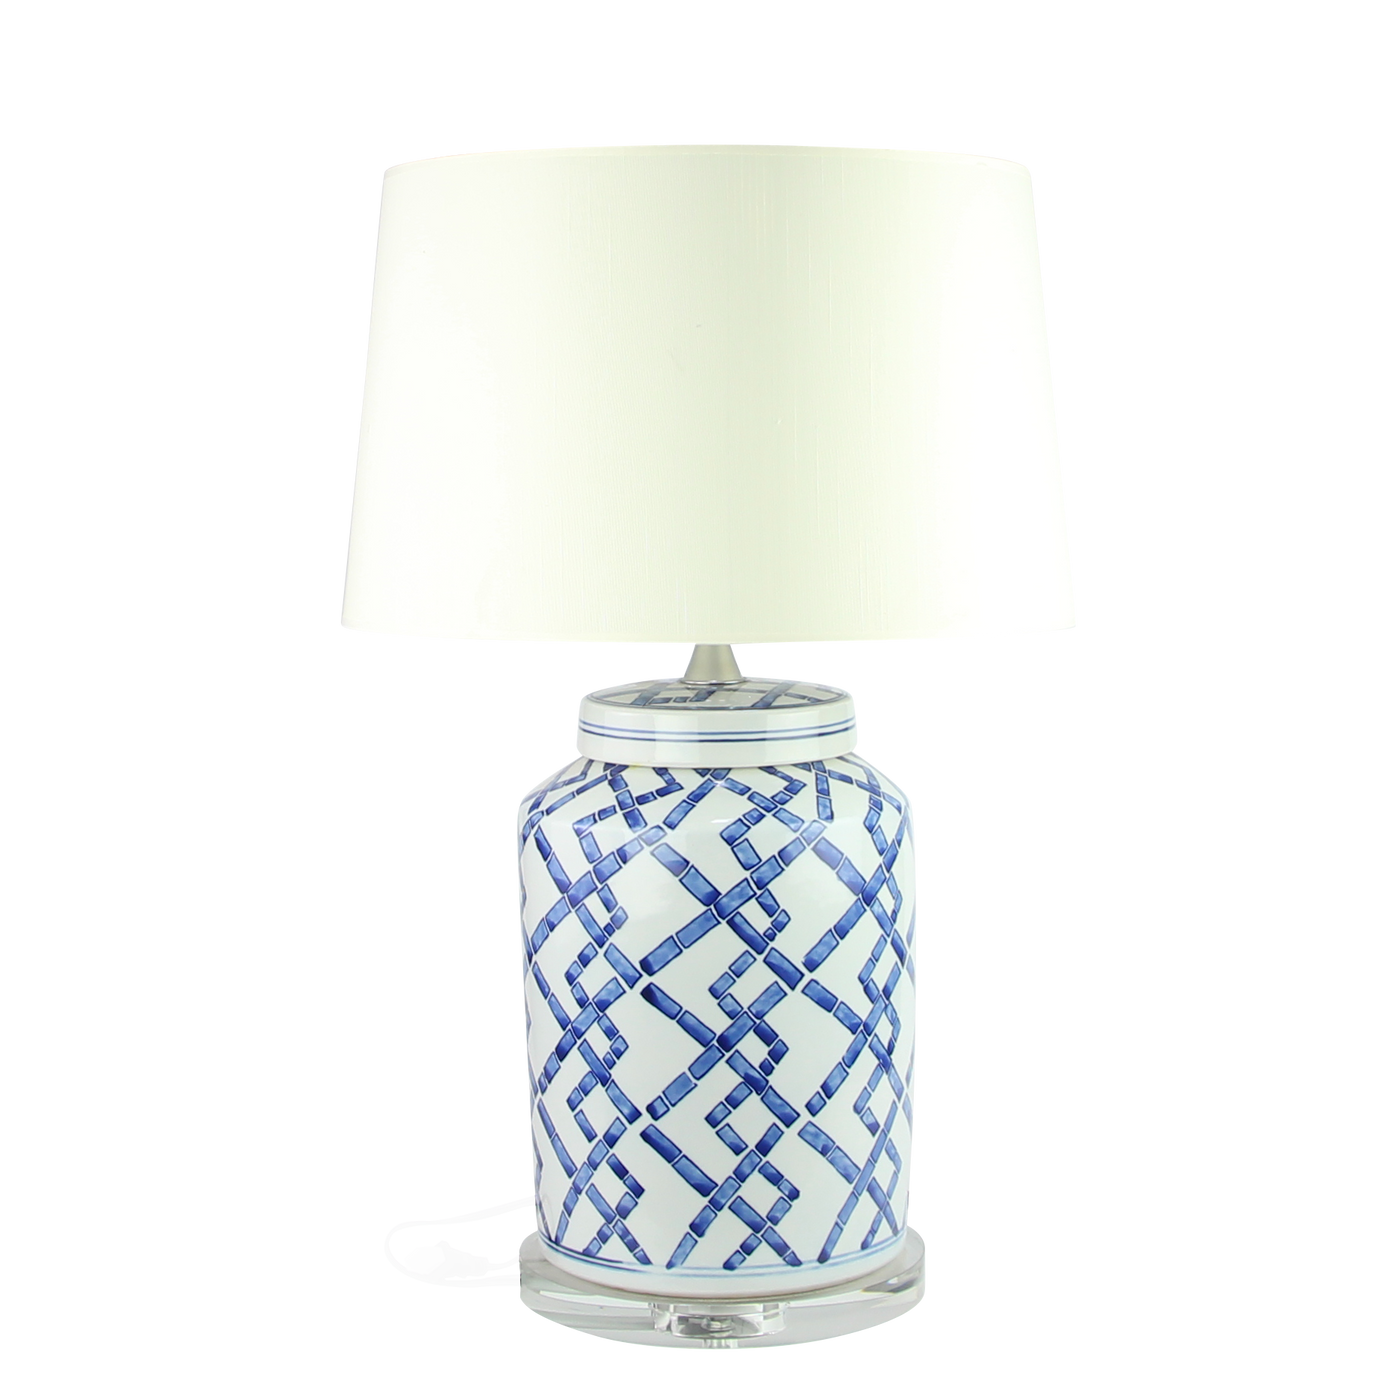 BLUE AND WHITE CERAMIC JAR TABLE LAMP 17"